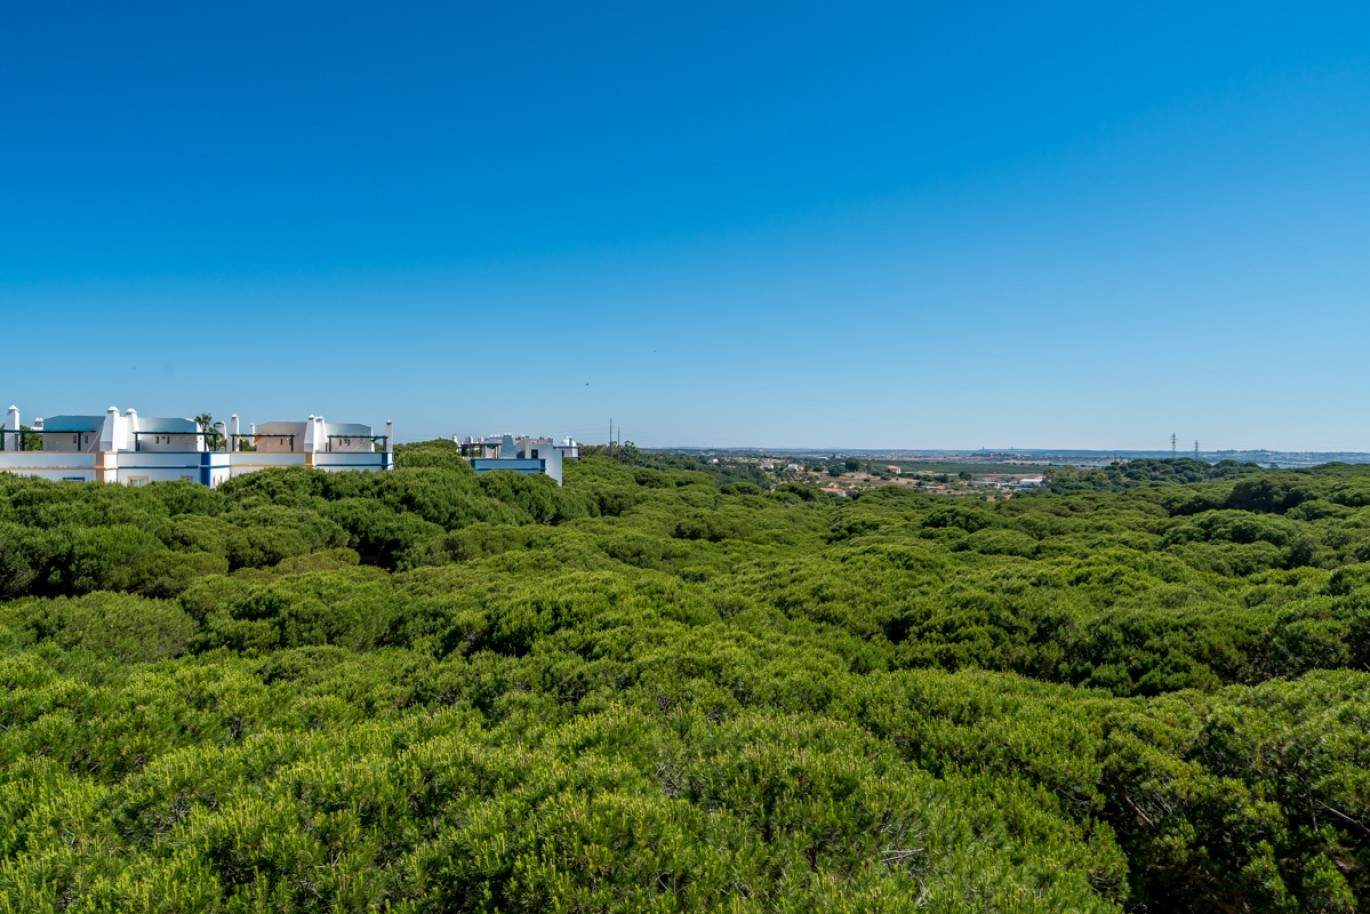 Venda de vivienda en Praia Verde, Castro Marim, Algarve, Portugal_80395